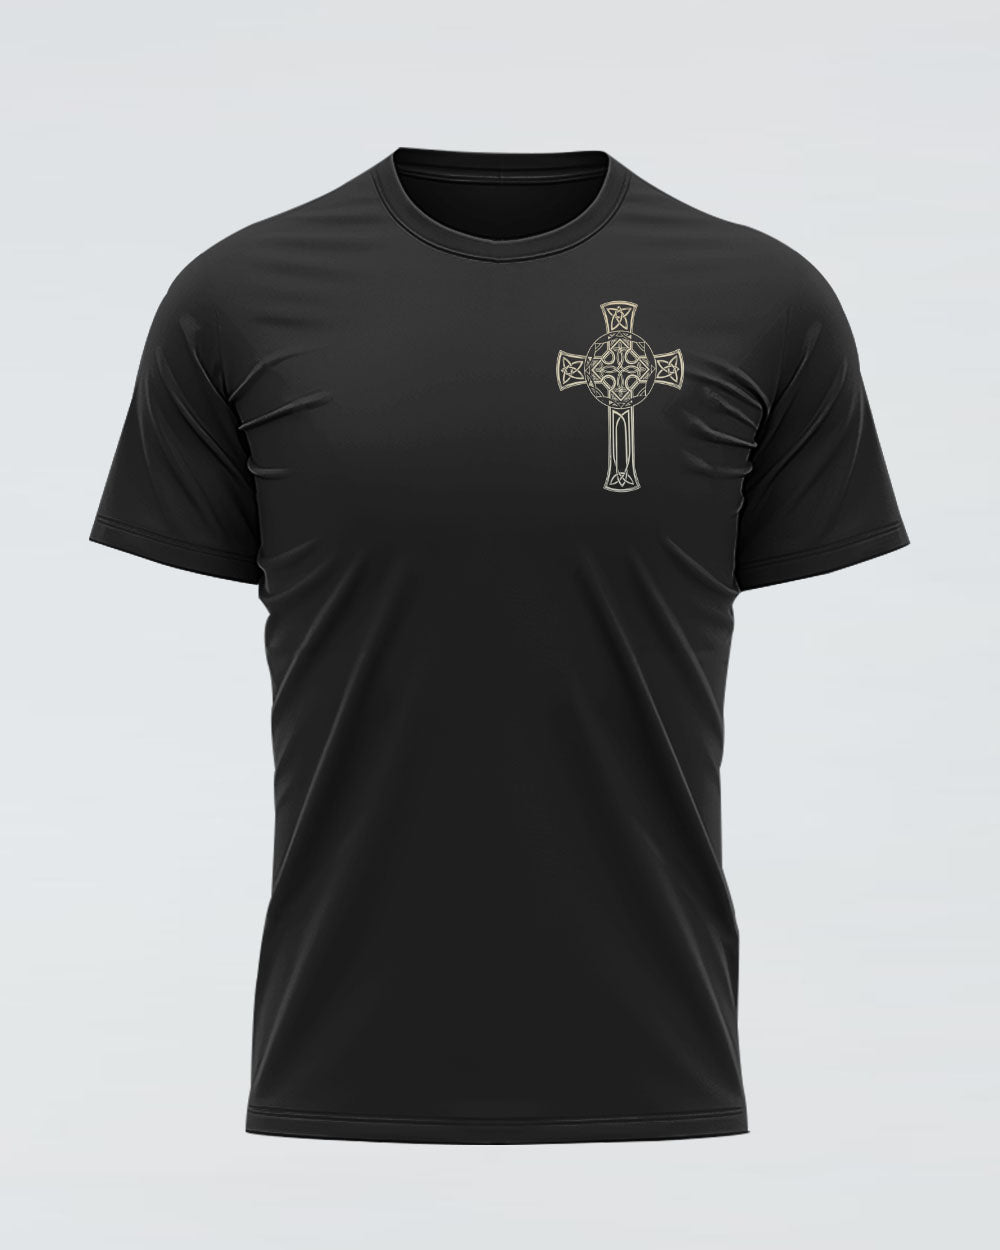 Irish By Blood American By Birth Wings Cross Men's Christian Tshirt